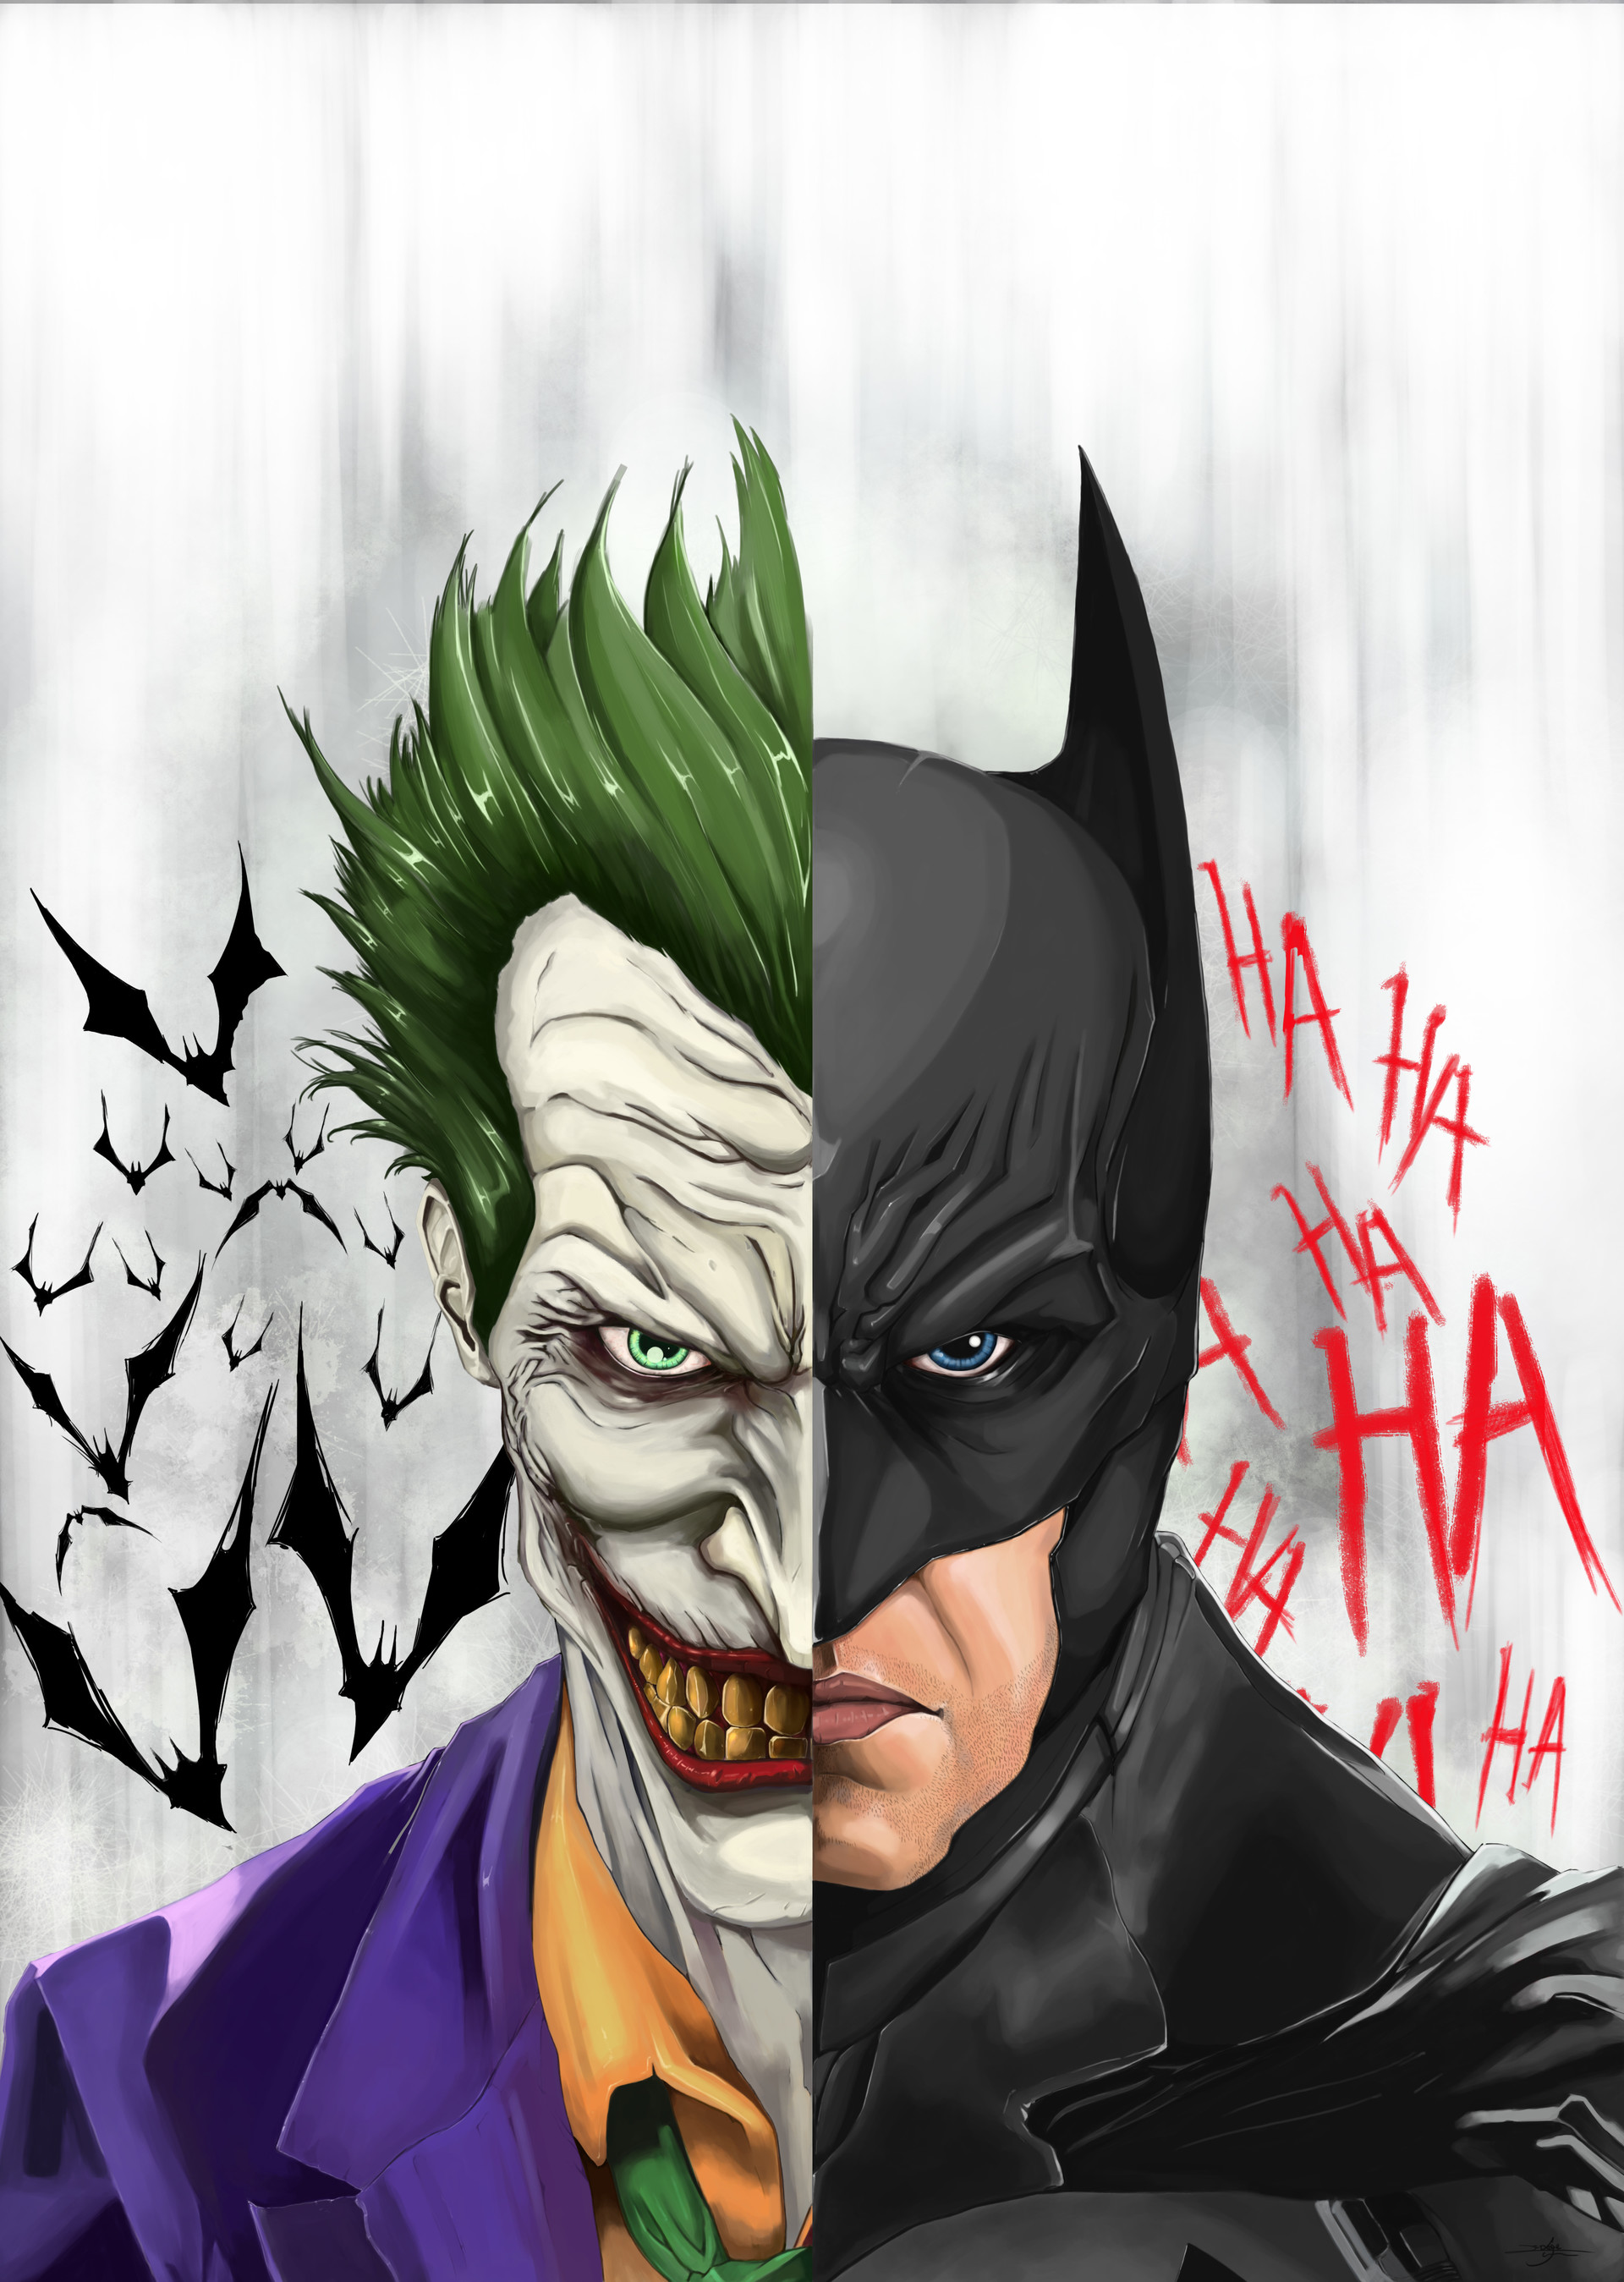 ArtStation - batman and joker